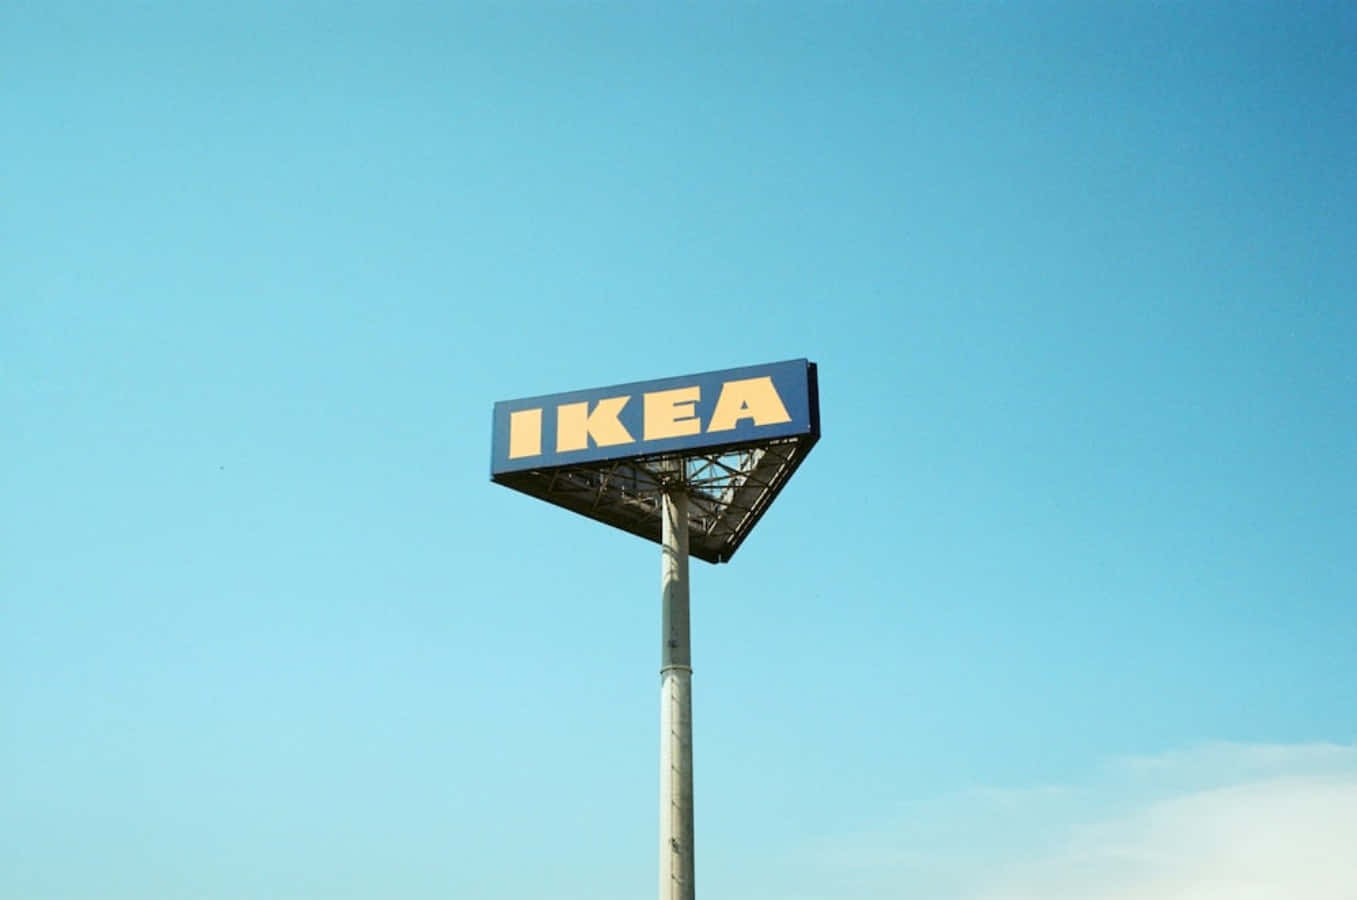 Ikea Sign On A Pole Against A Blue Sky